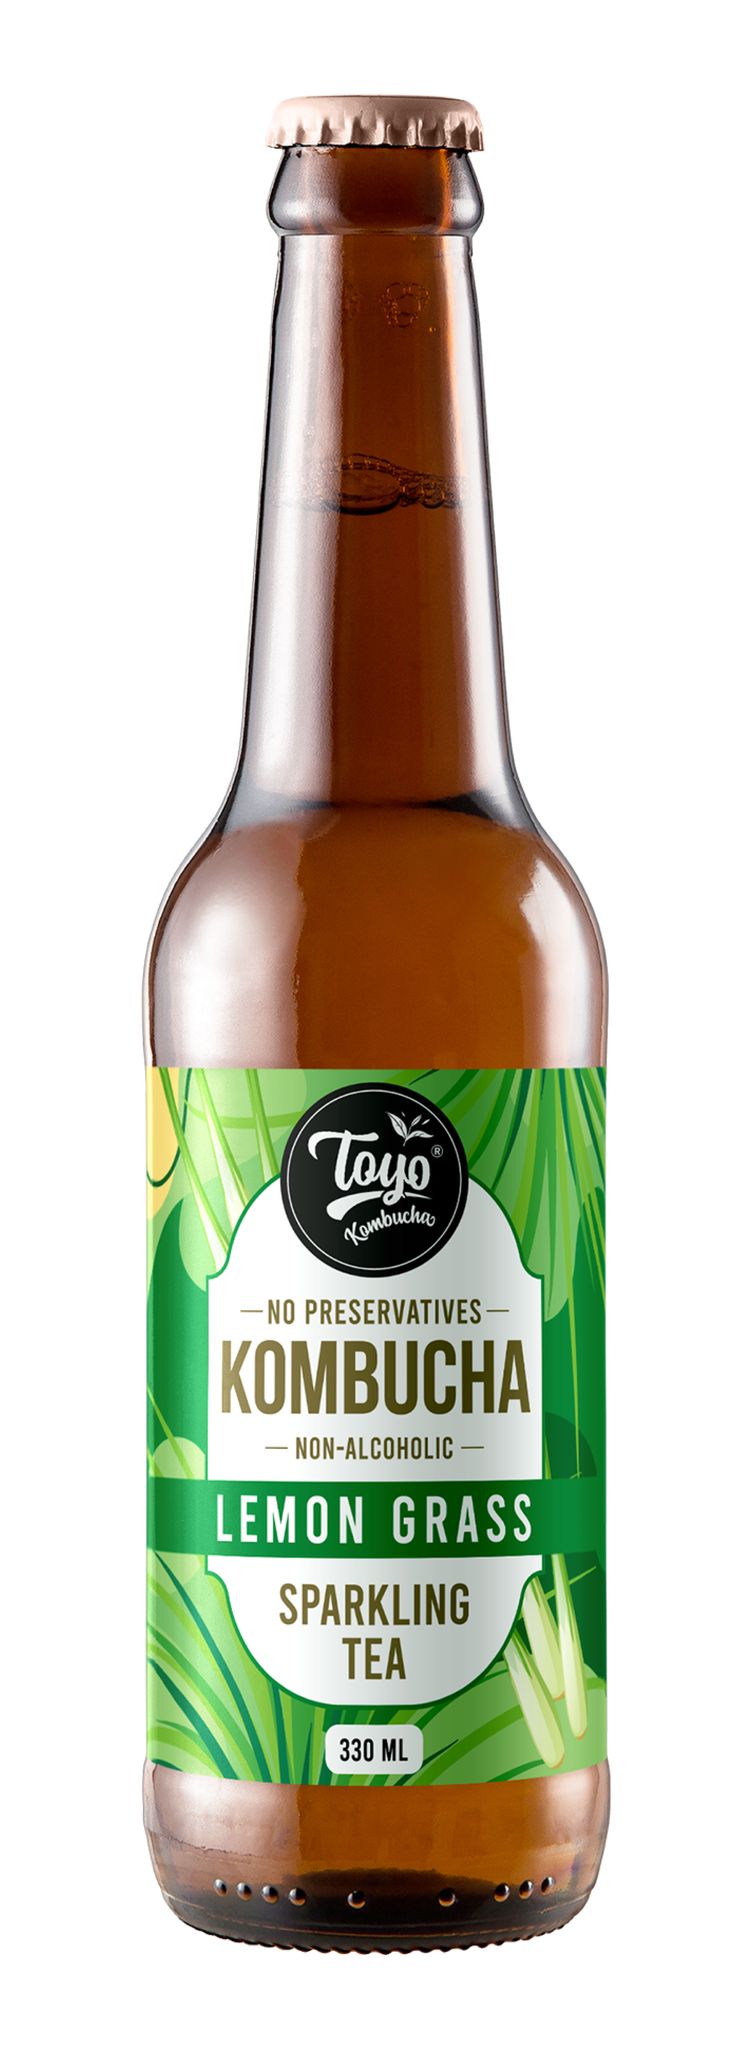 Toyo Kombucha - Sparkling Fermented Tea | Lemon Grass | 330ml (Pack of 6) - Rich in Probiotics and Antioxidants